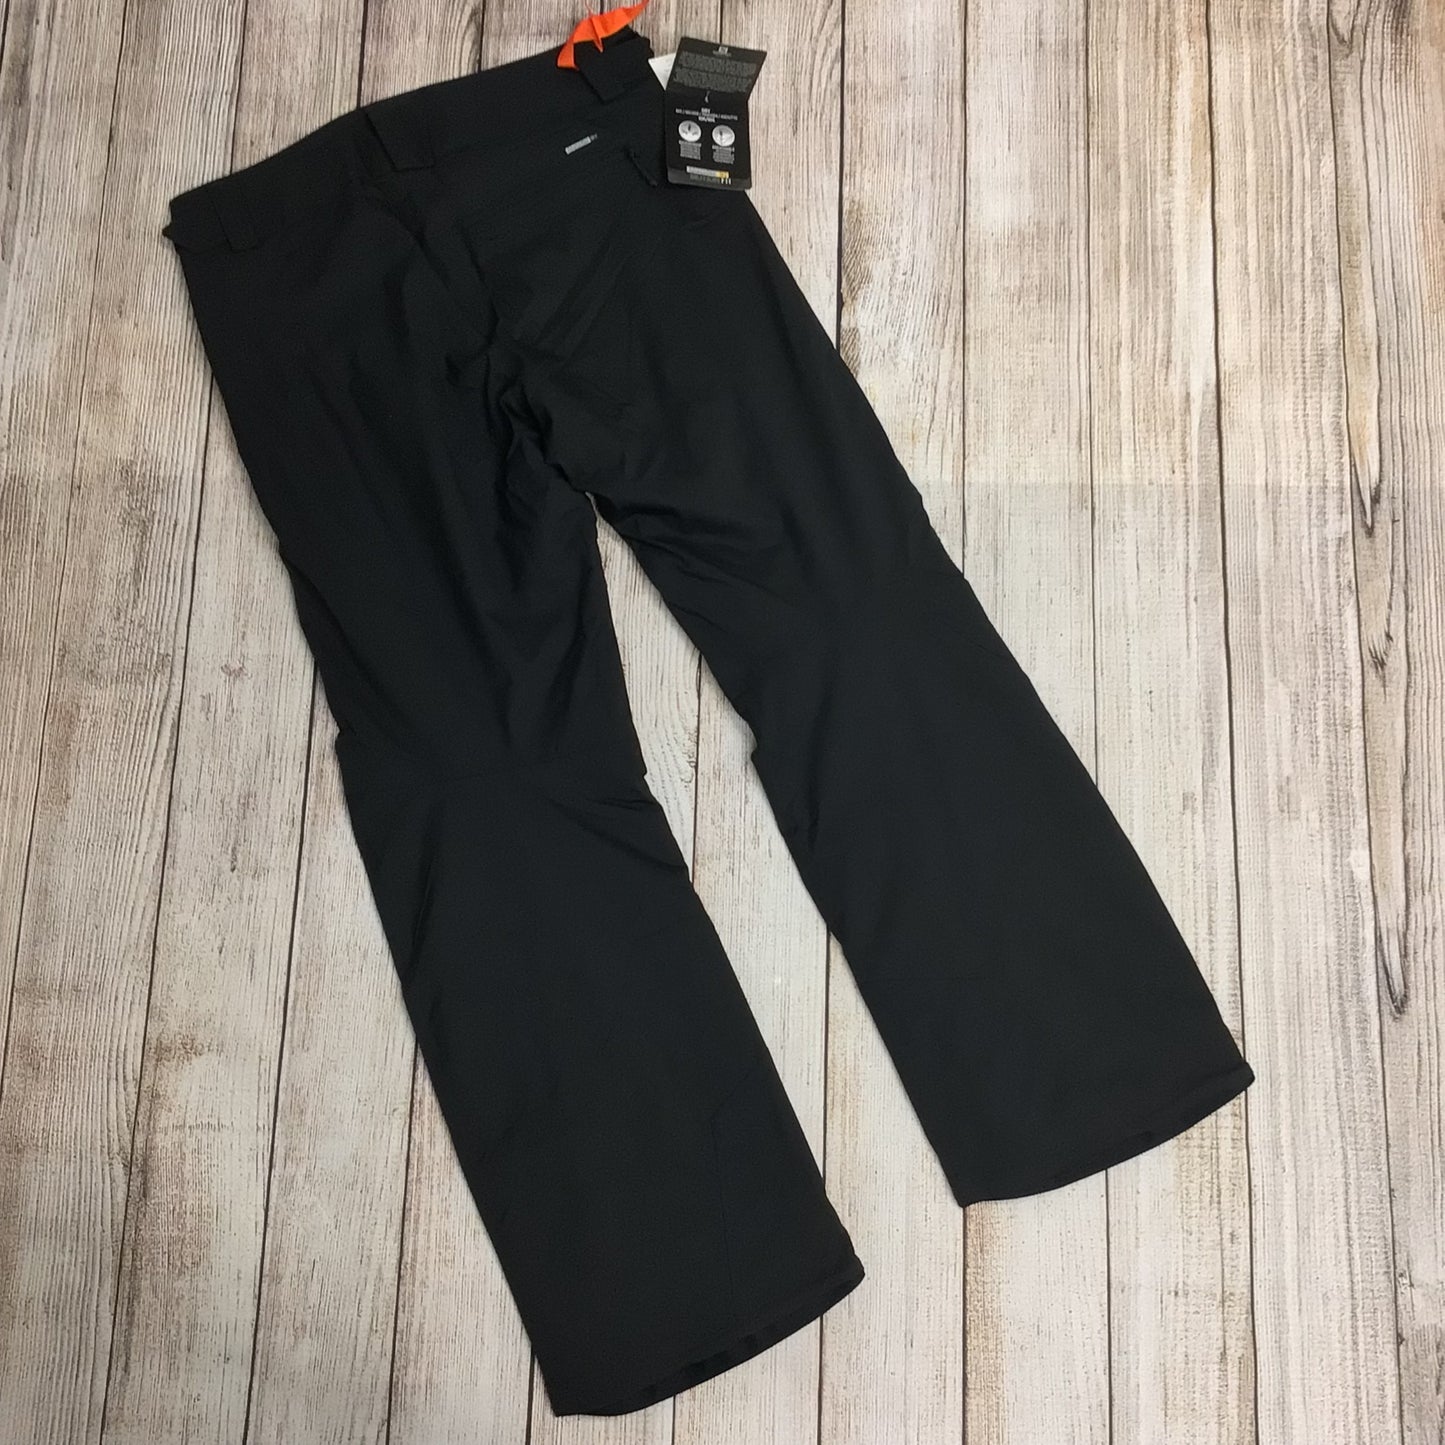 BNWT Salomon Black Stormrace Insulated Pant Salopettes Size L Regular